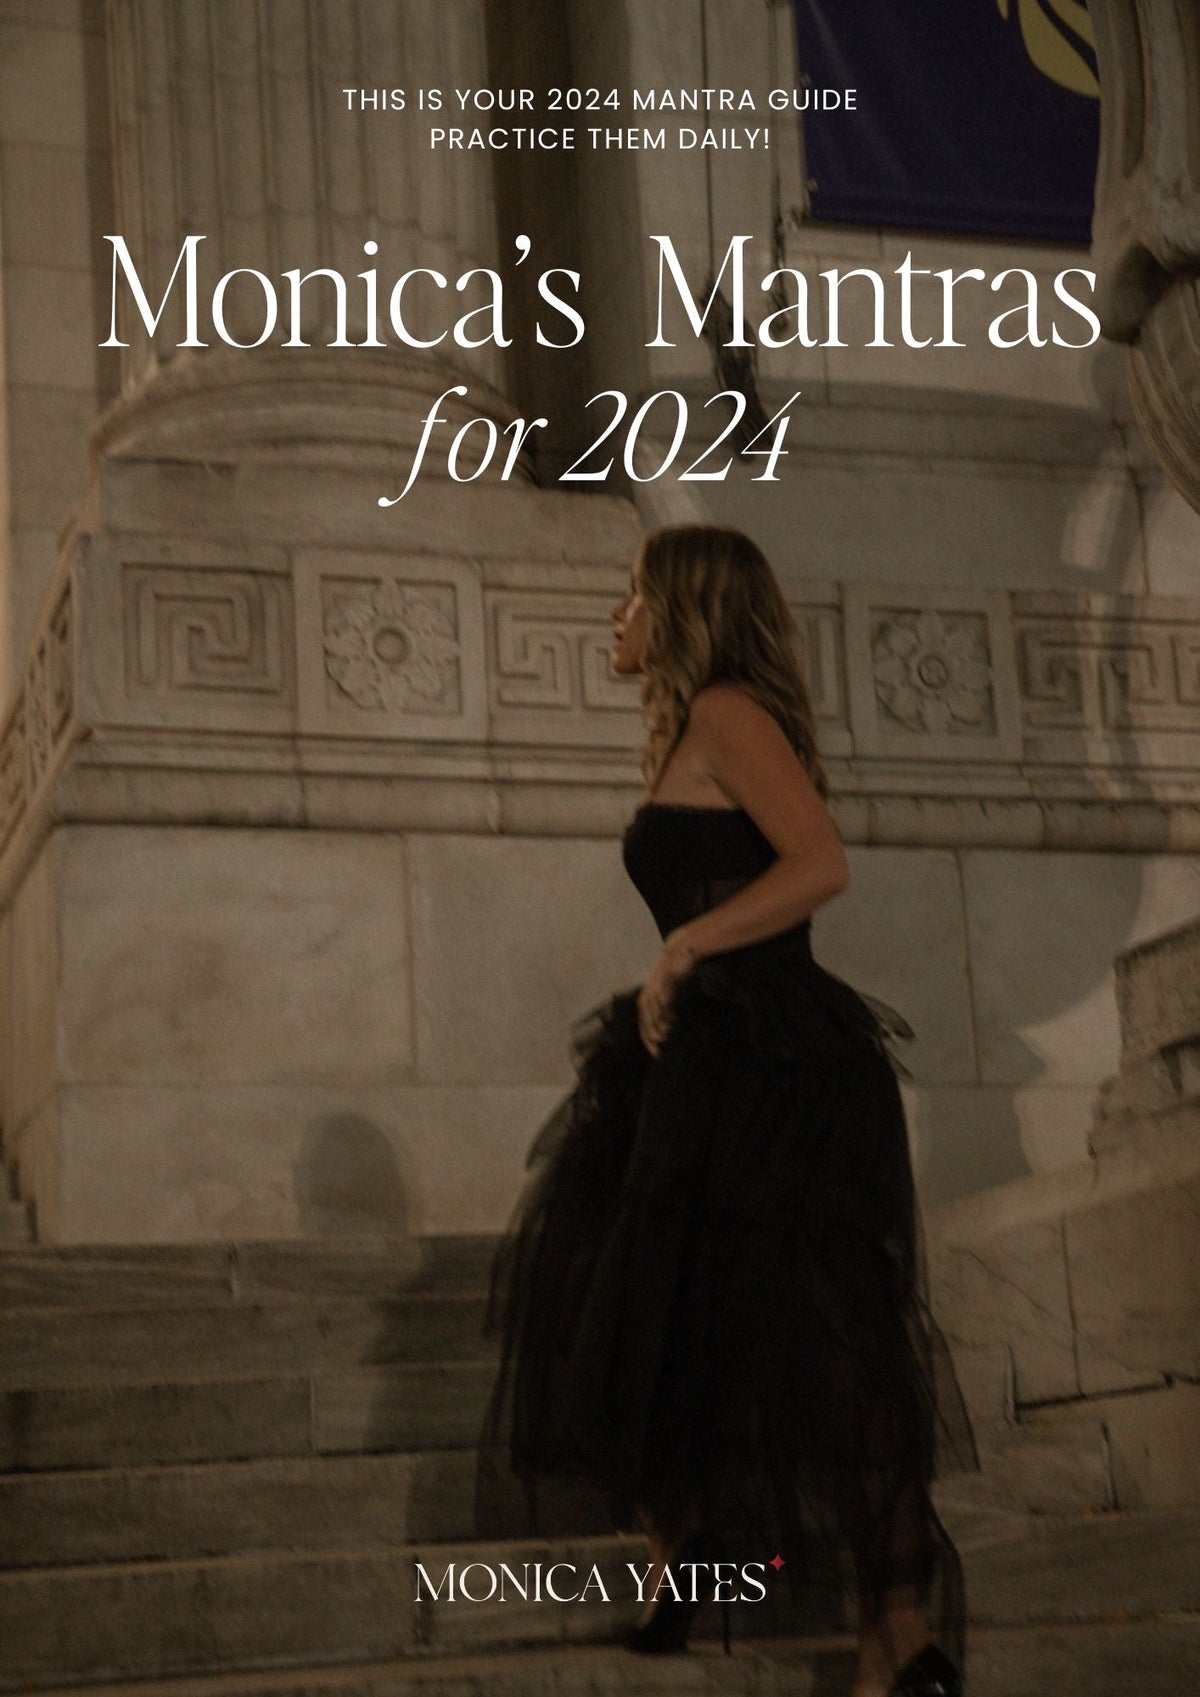 Monica's 2024 Mantras